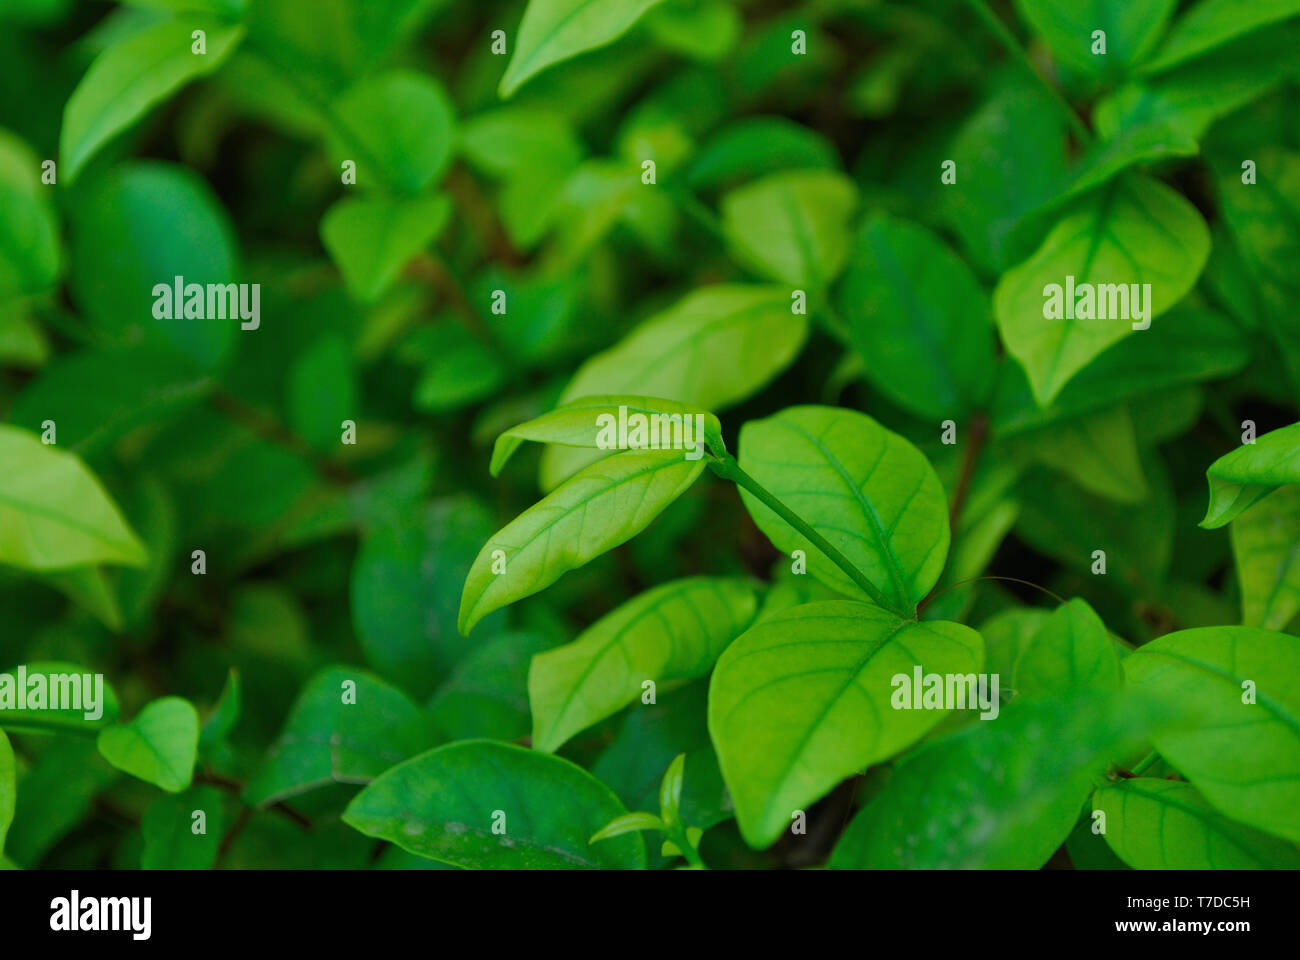 The green leaves of the Wrightia genus Stock Photo